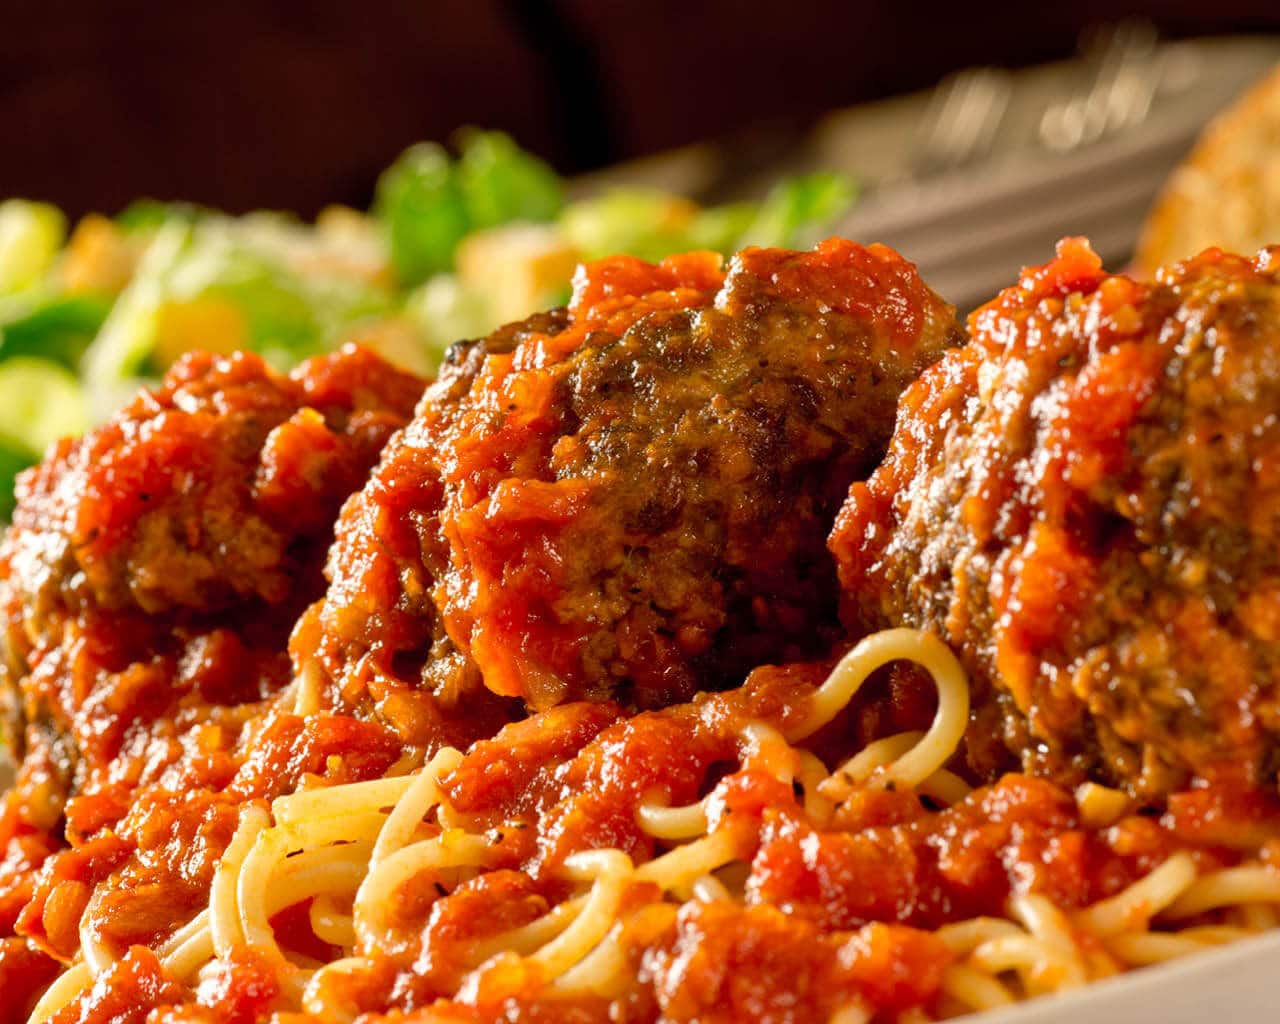 A close up of spaghetti and meatballs